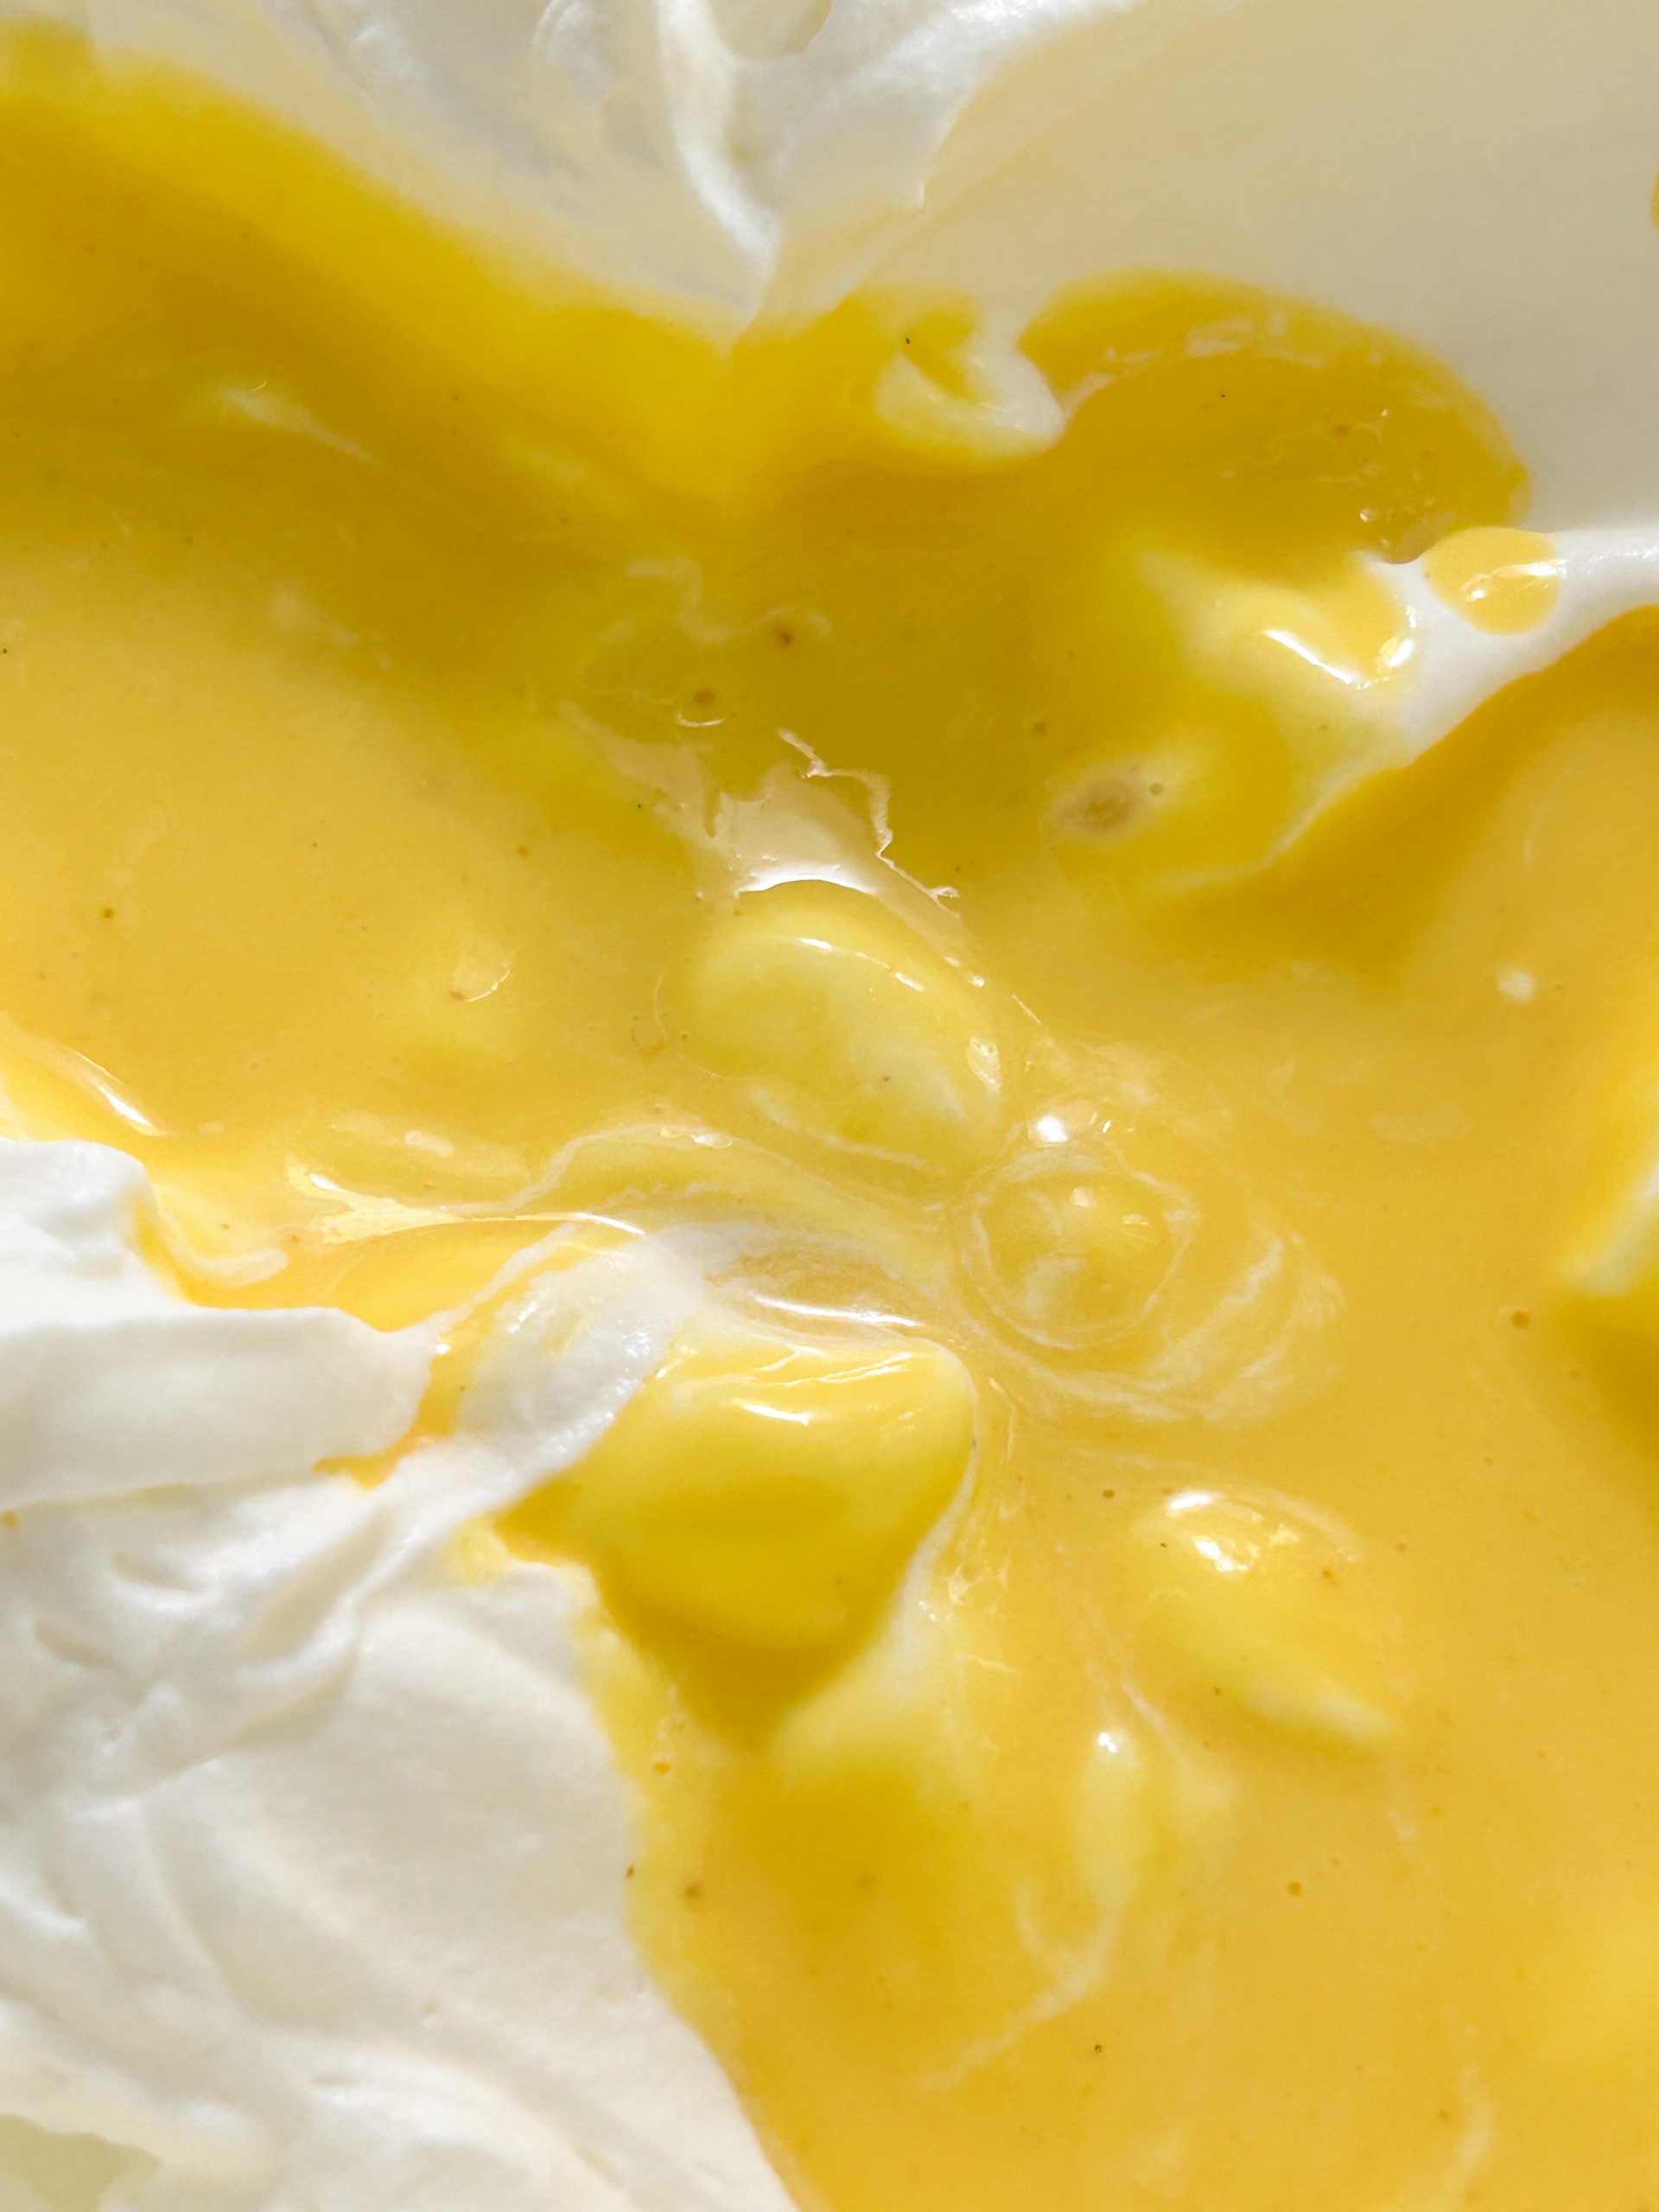 mango lassi added to whipped cream